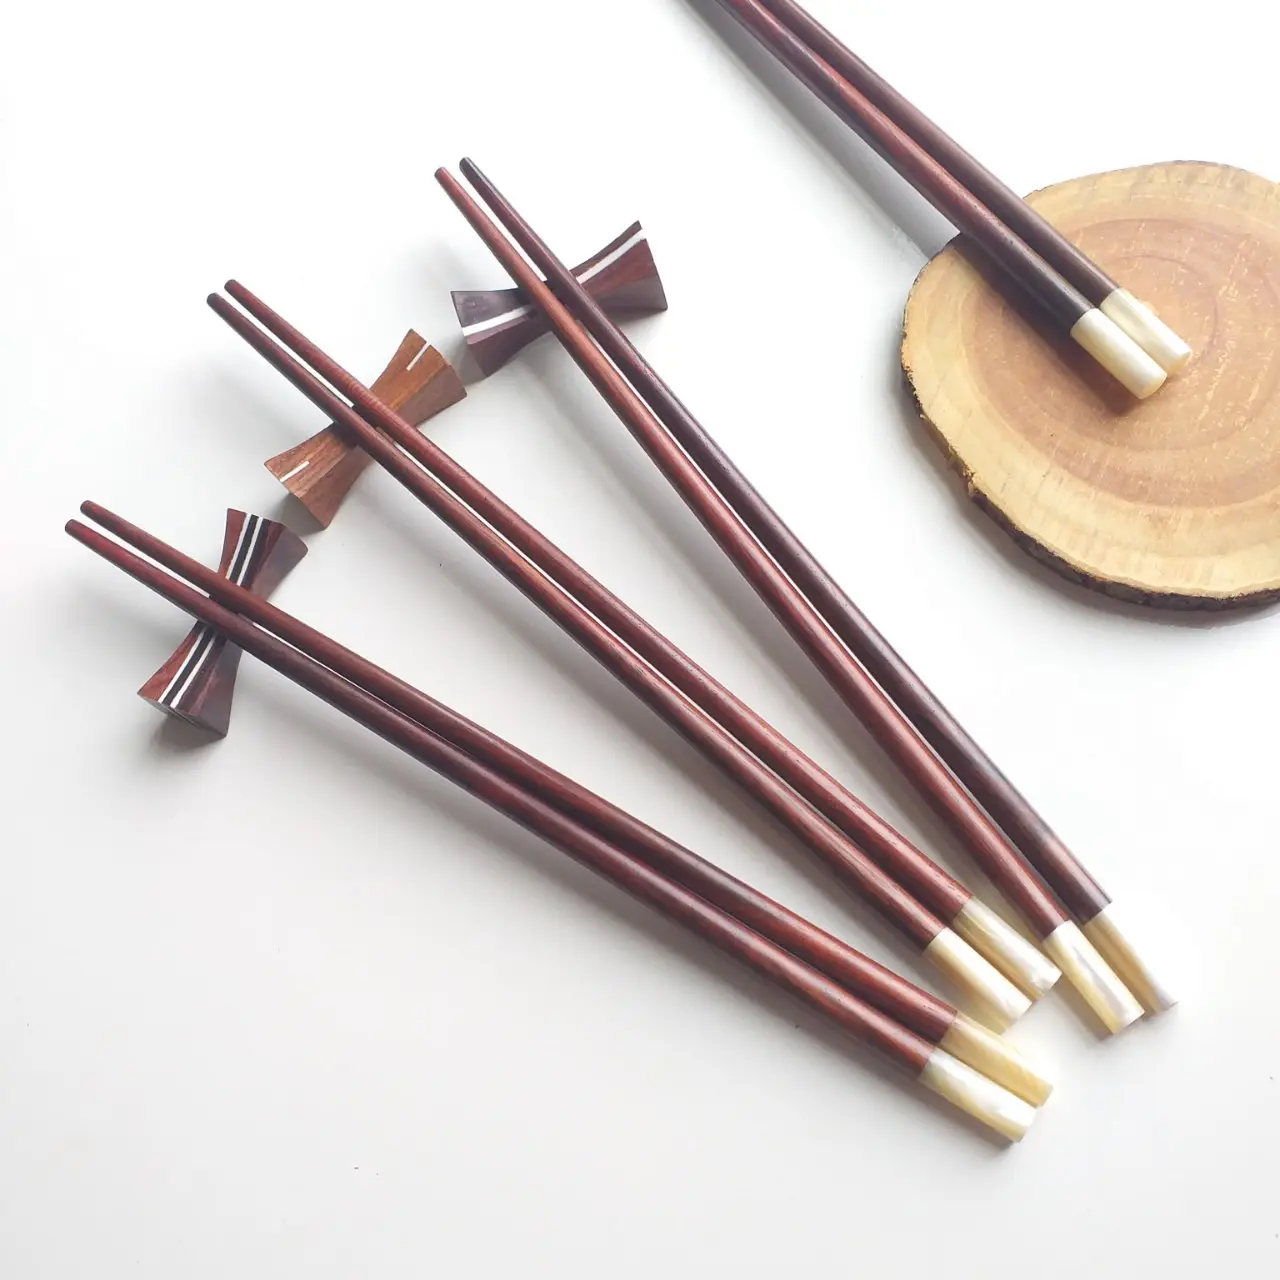 Wholesale high quality Disposable / Reusable wooden chopsticks - For restaurant, hotel, household, etc